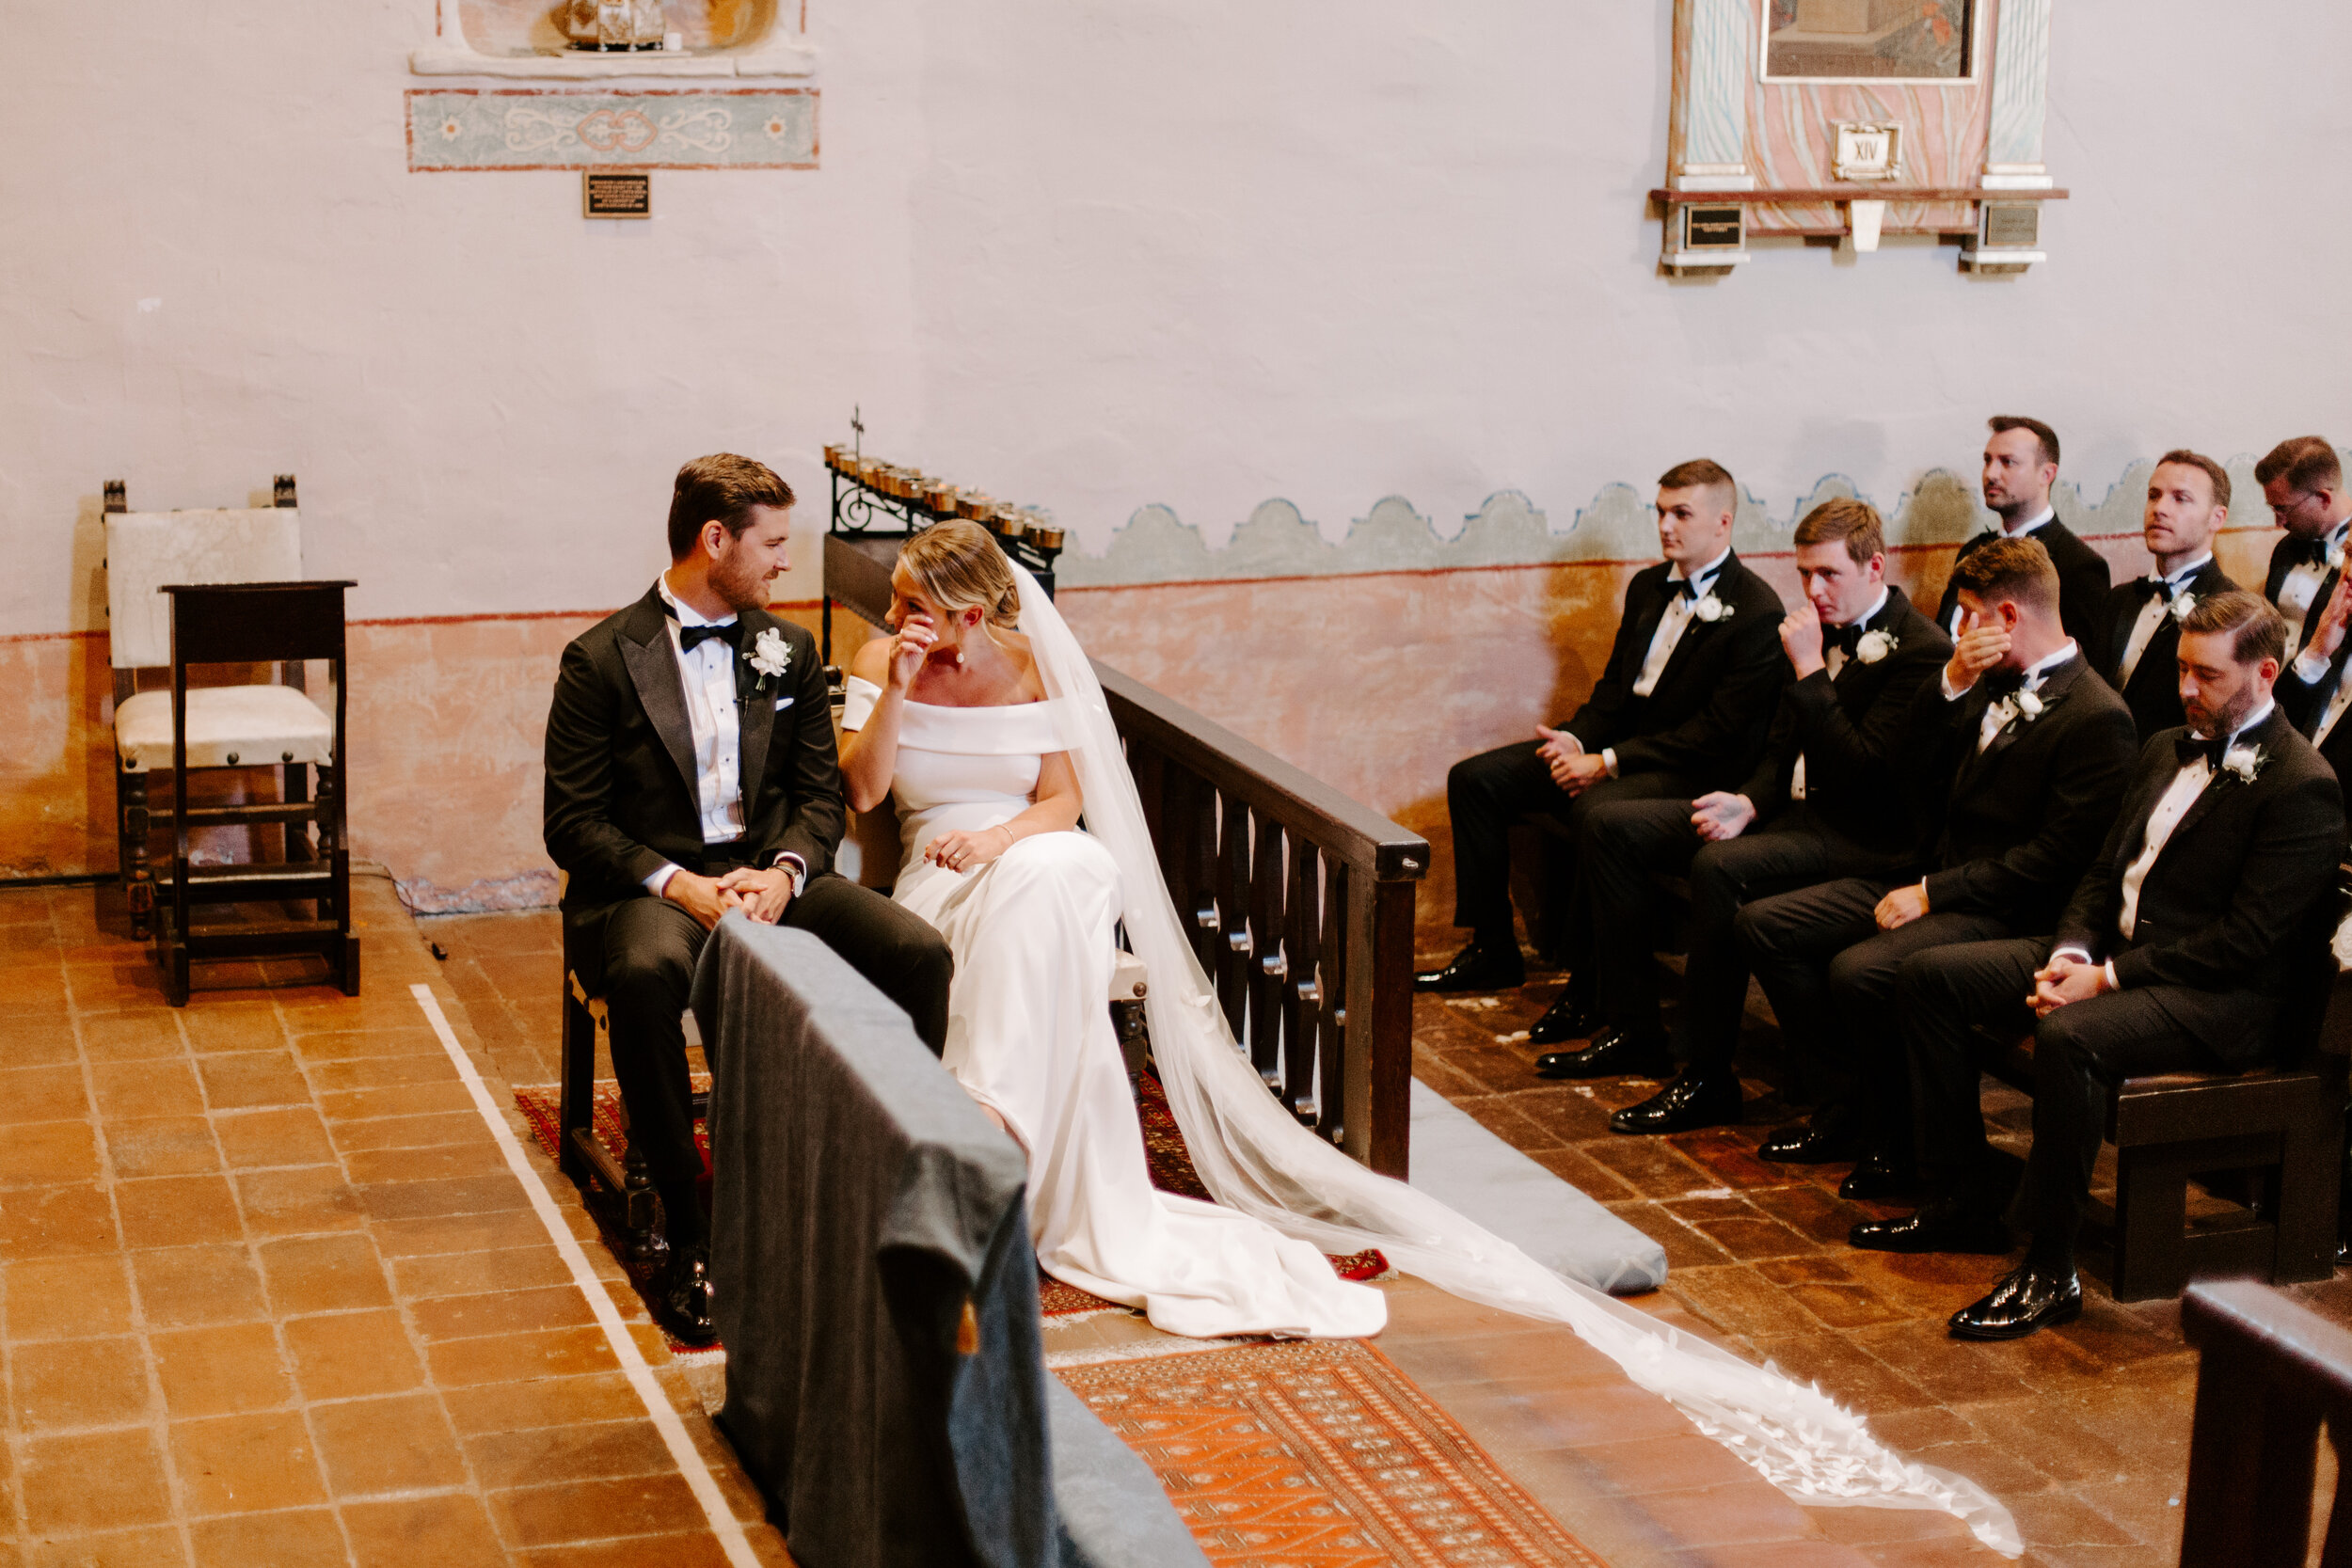 San Diego Wedding Photographer, San Diego Wedding photography, San Diego Wedding Venue, Mission Basilica San Diego de Alcala Photographer, Mission Basilica San Diego de Alcala